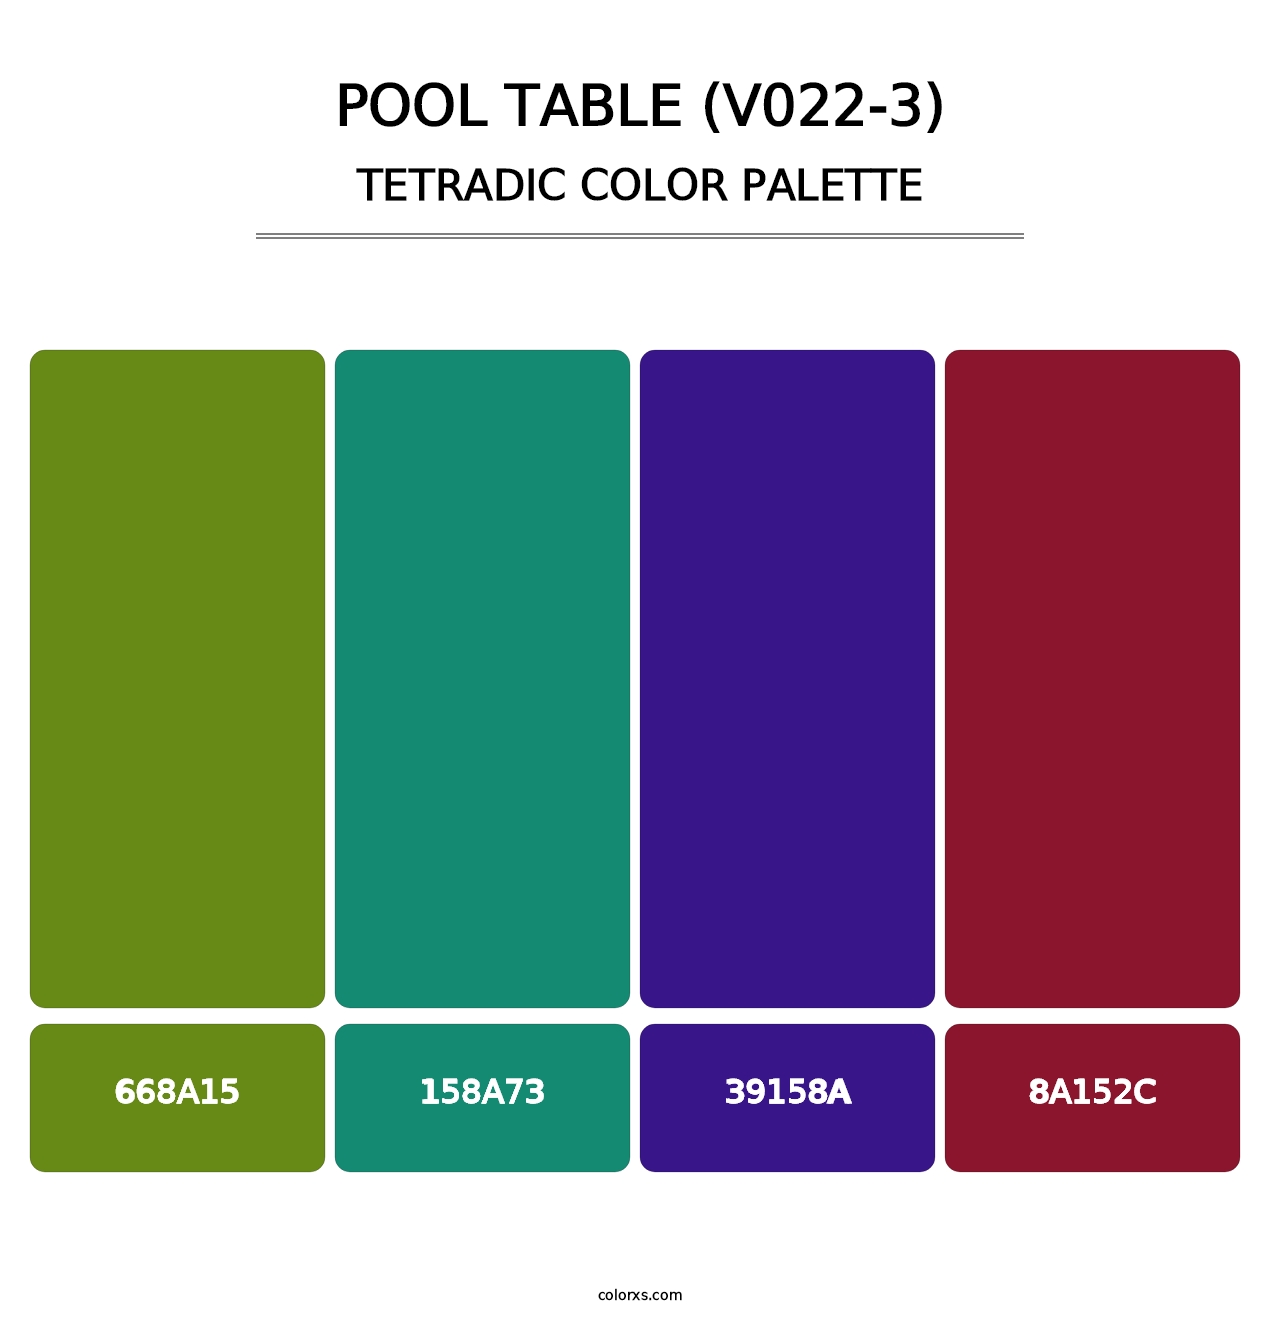 Pool Table (V022-3) - Tetradic Color Palette